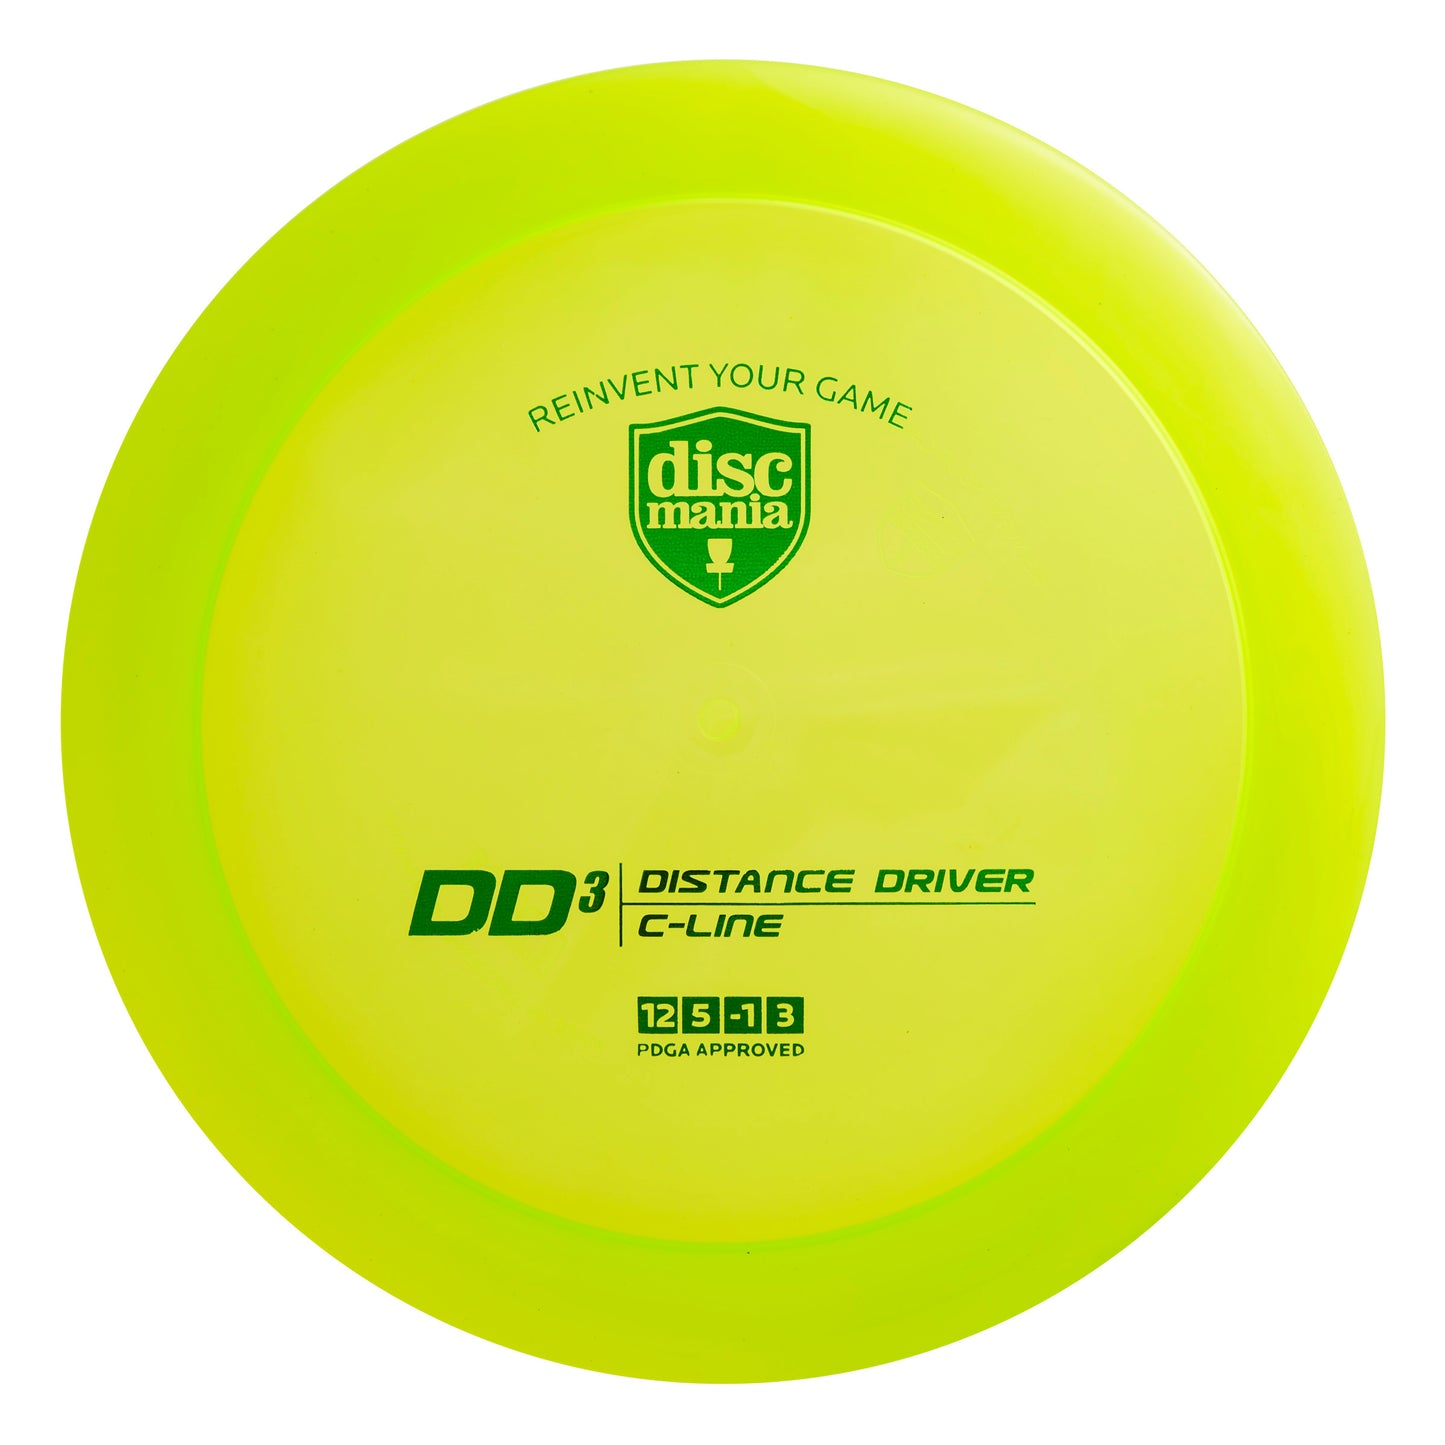 DD3 (Distance Driver)